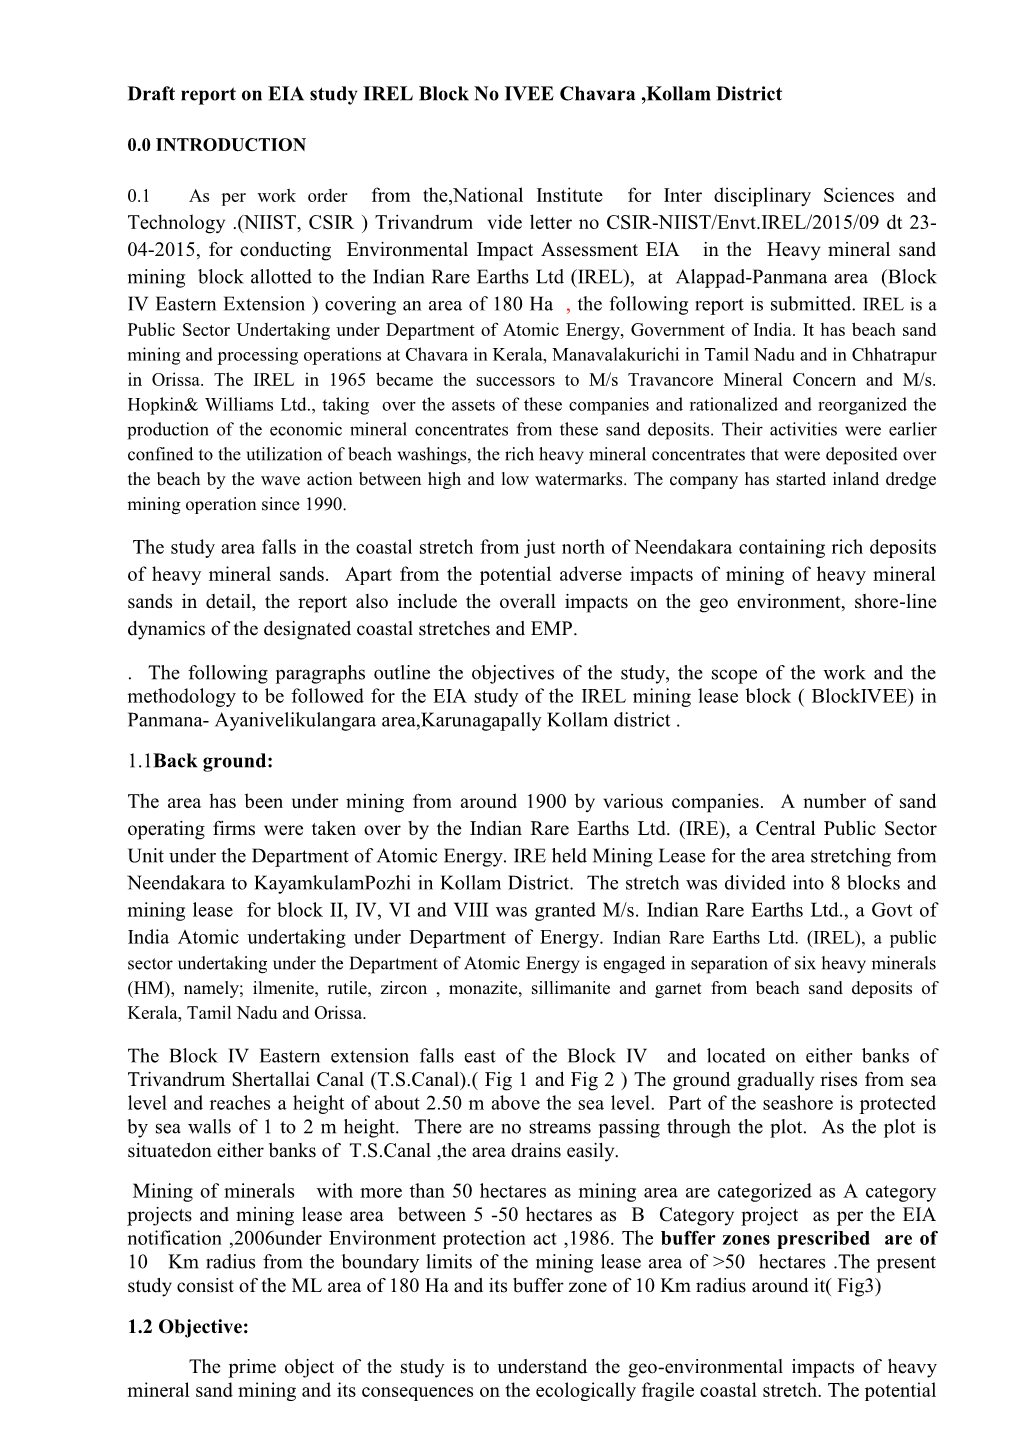 Draft Report on EIA Study IREL Block No IVEE Chavara ,Kollam District